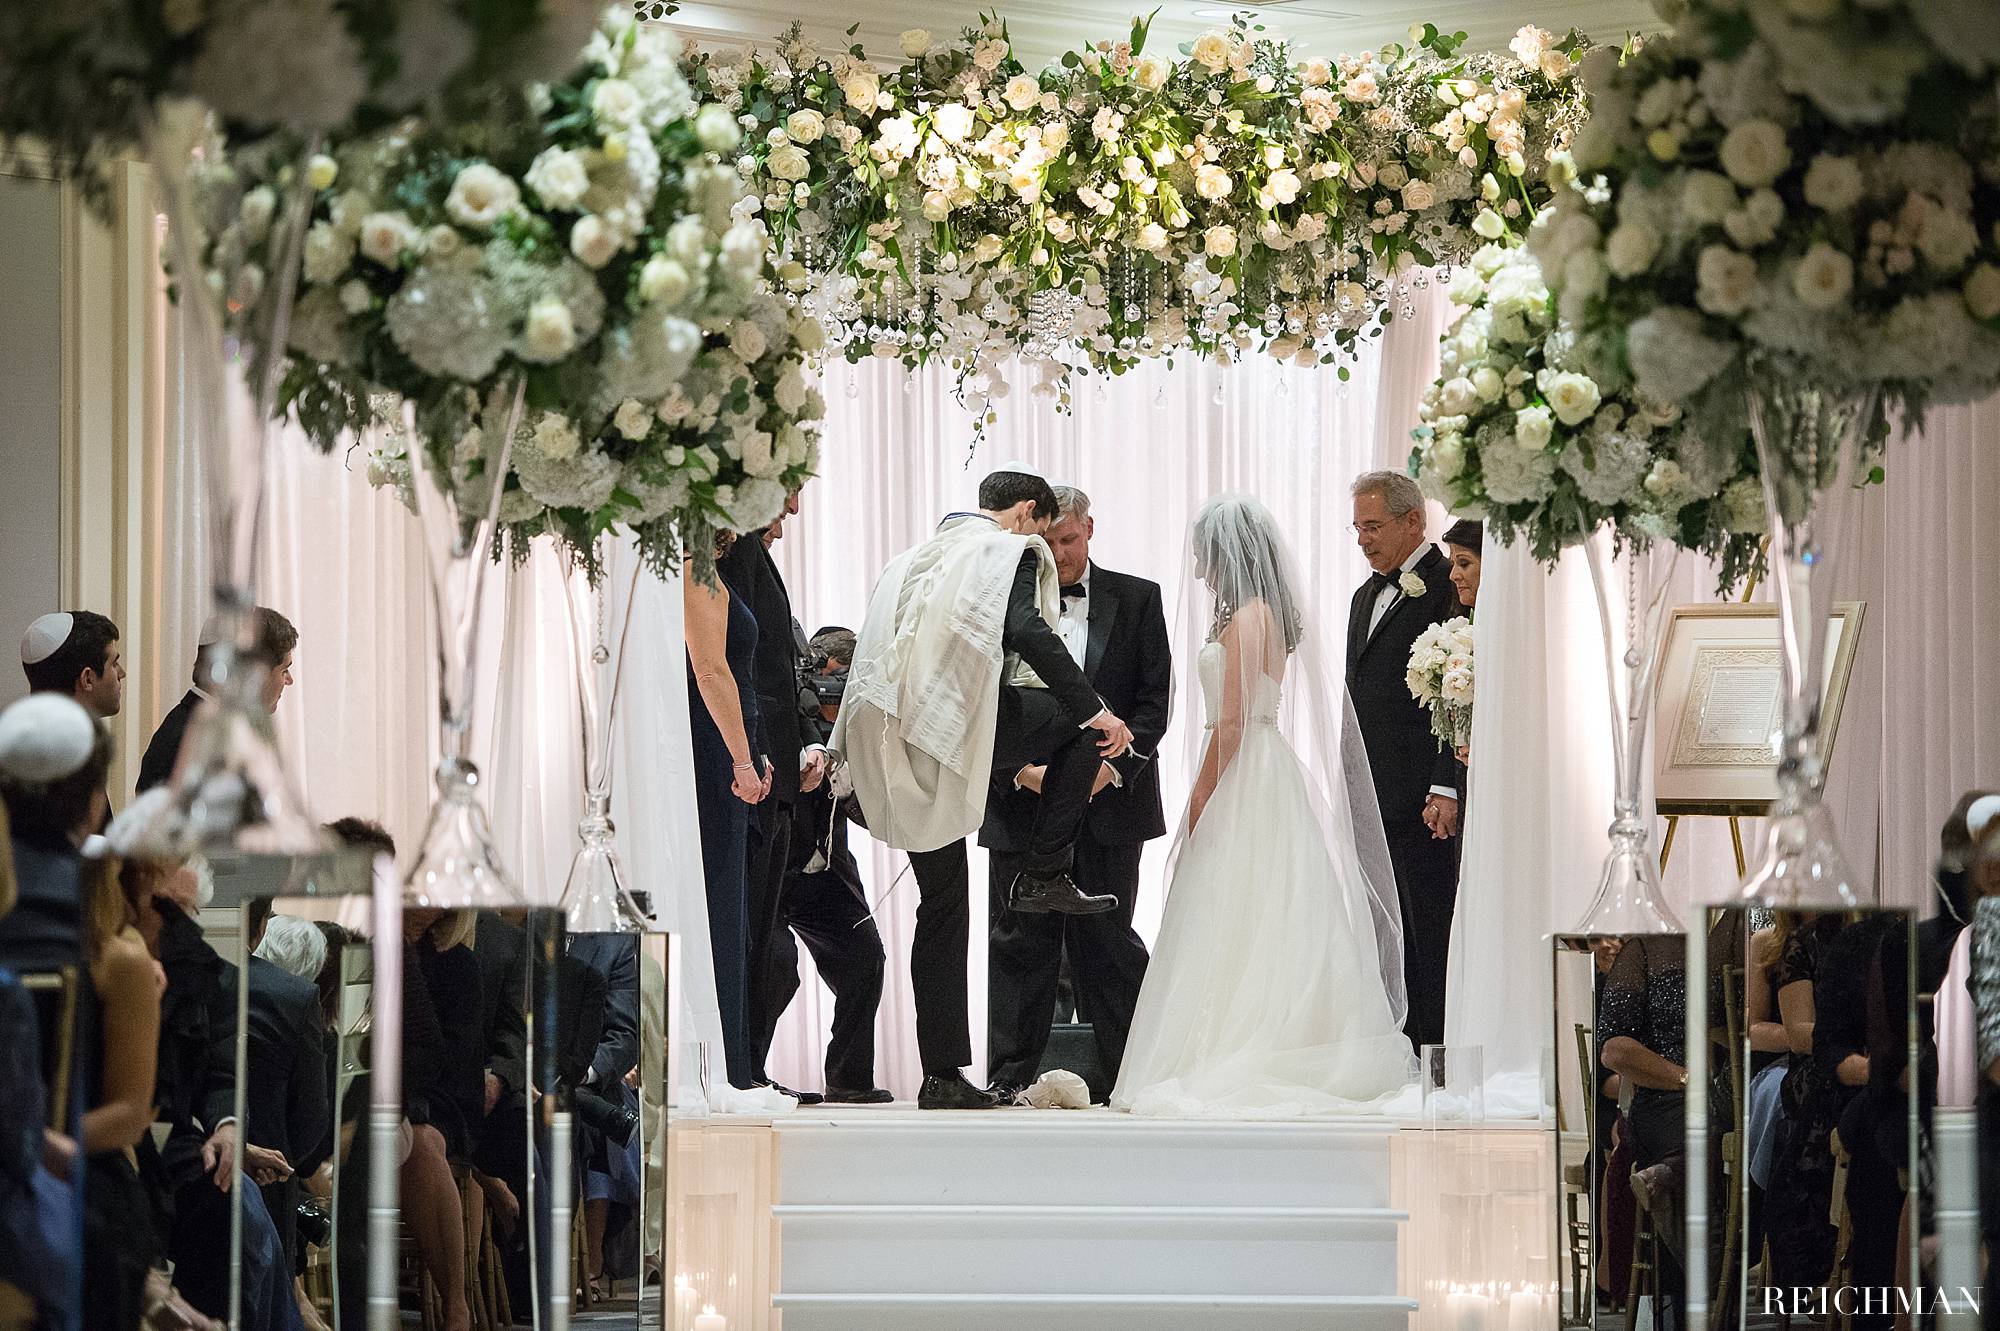 Groom stepping on glass Jewish wedding